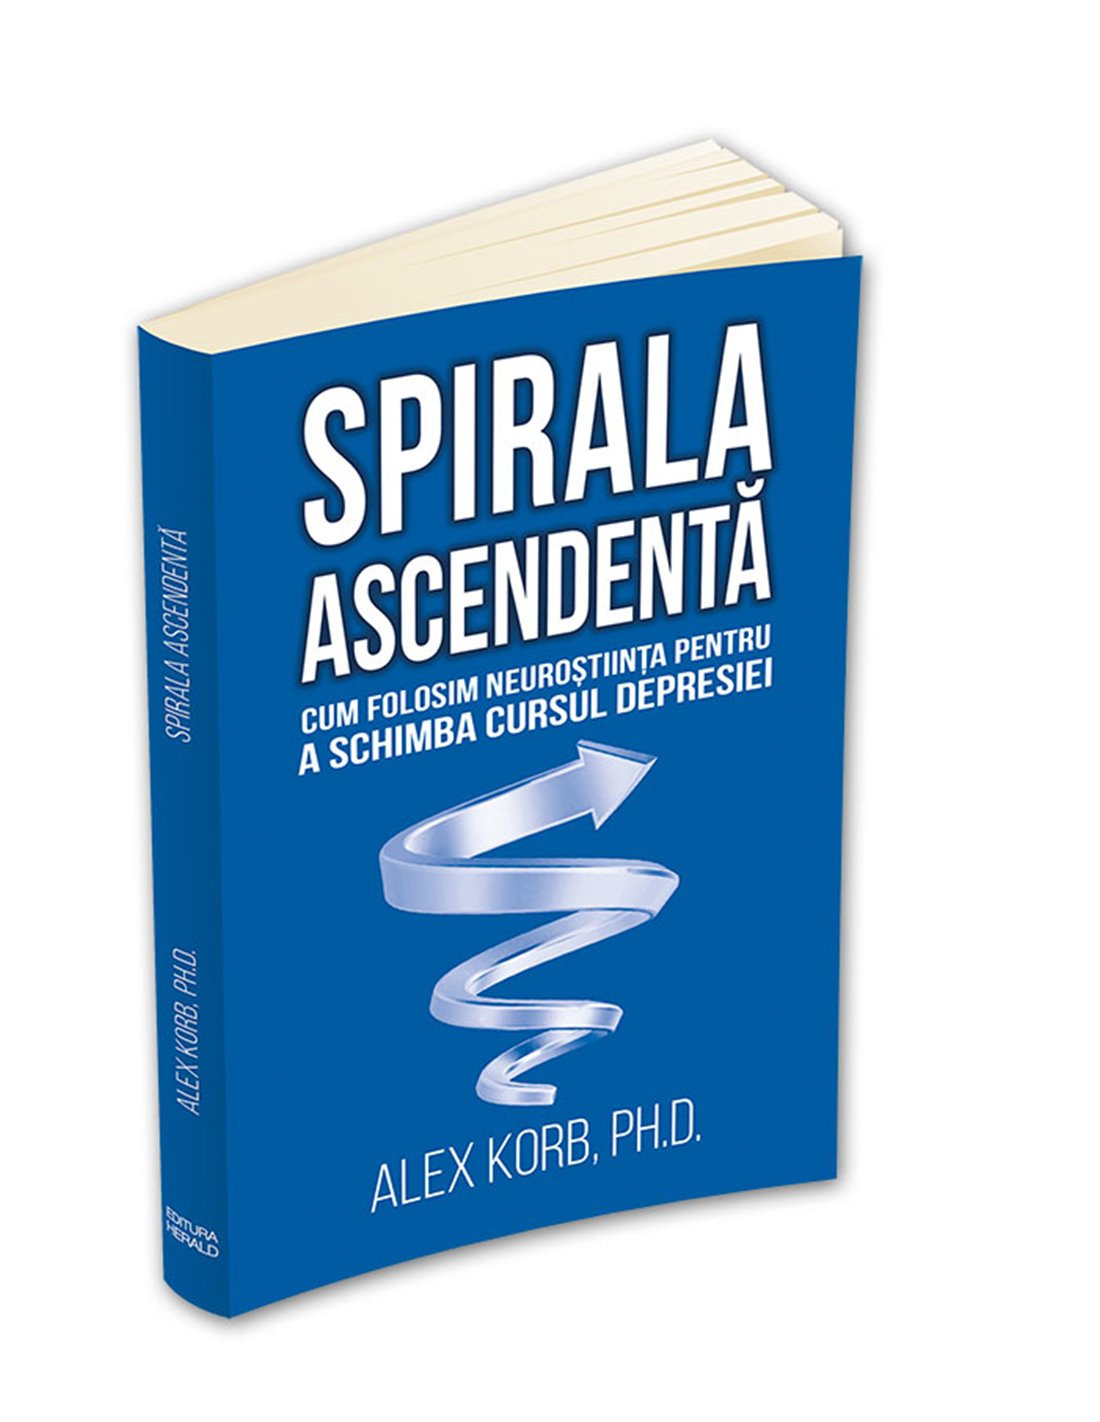 Spirala ascendenta - Cum folosim neurostiinta pentru a schimba cursul depresiei - Alex Korb | Editura Herald